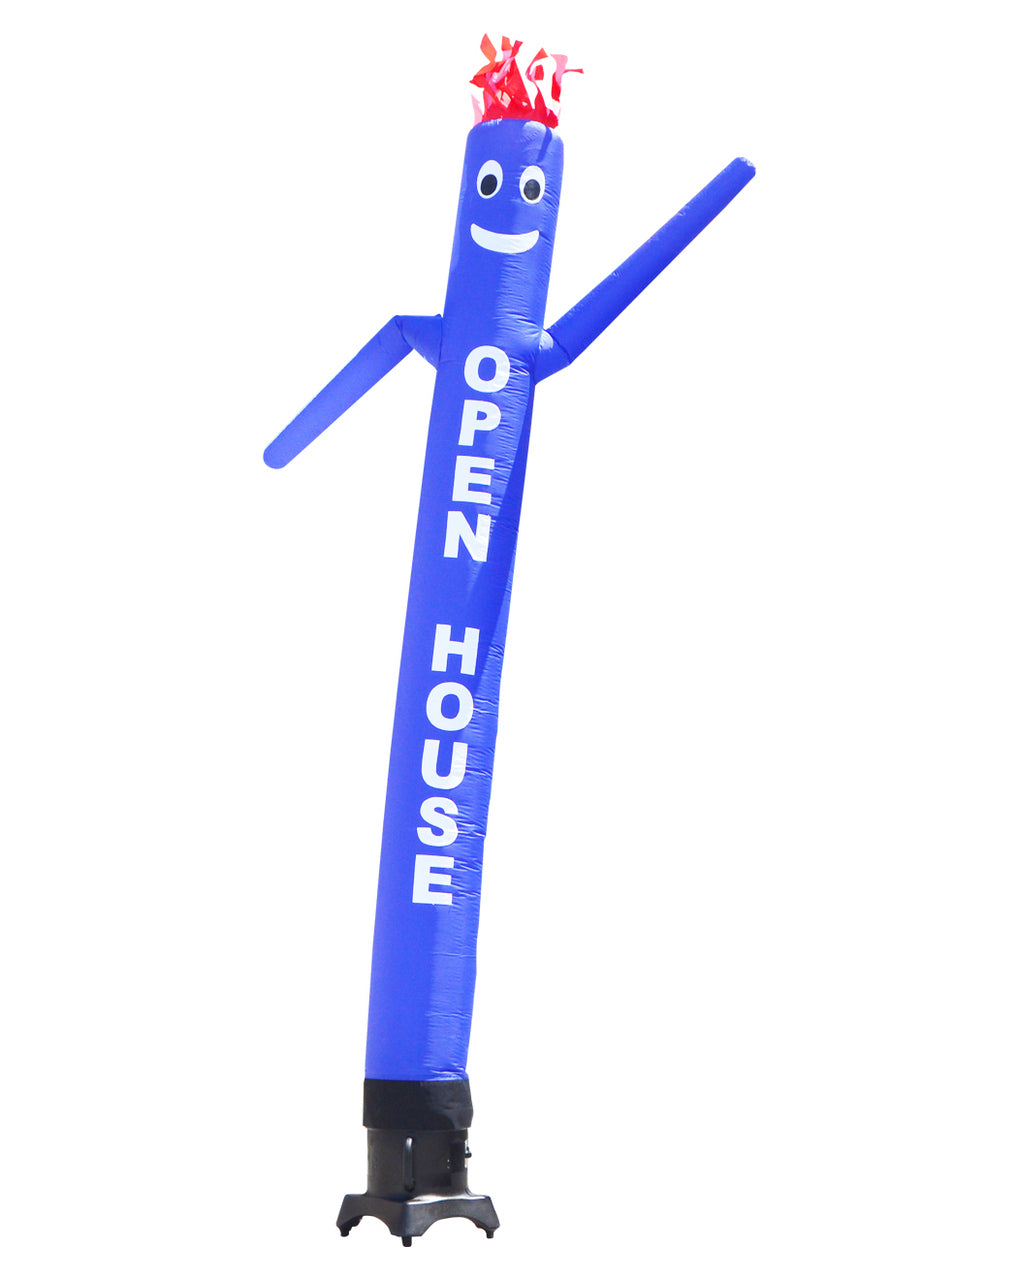 6ft Blue Open House Air Dancer Tube Man Wacky Wavy Inflatable